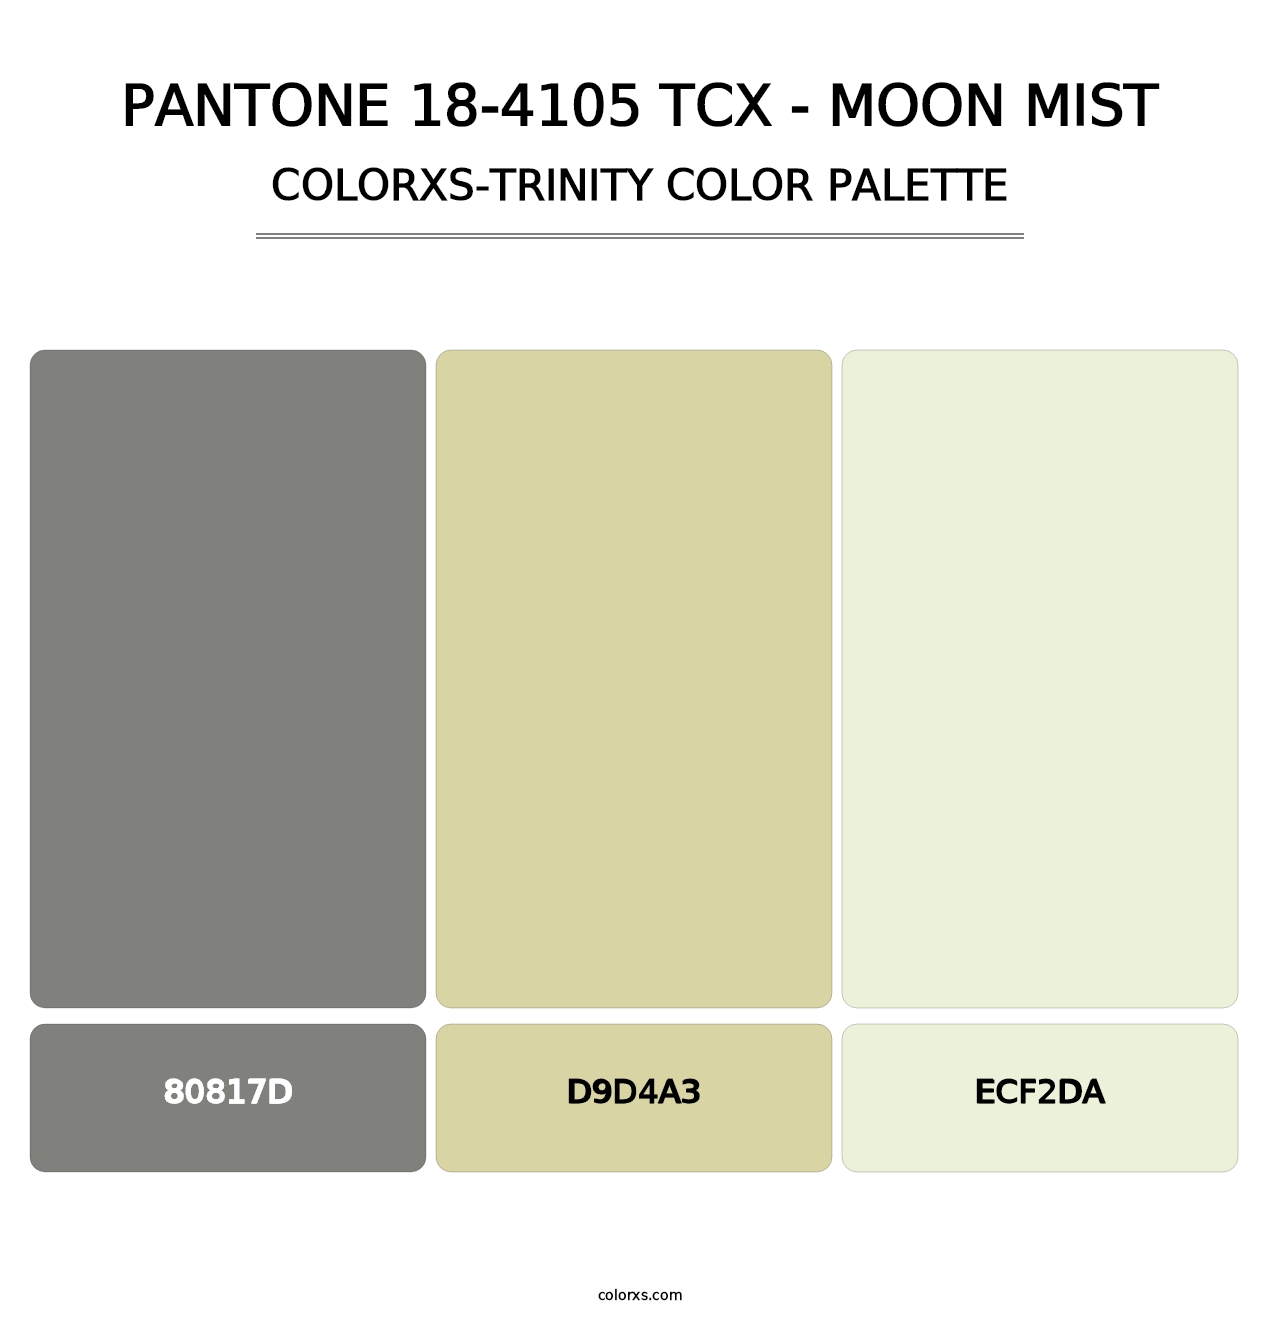 PANTONE 18-4105 TCX - Moon Mist - Colorxs Trinity Palette